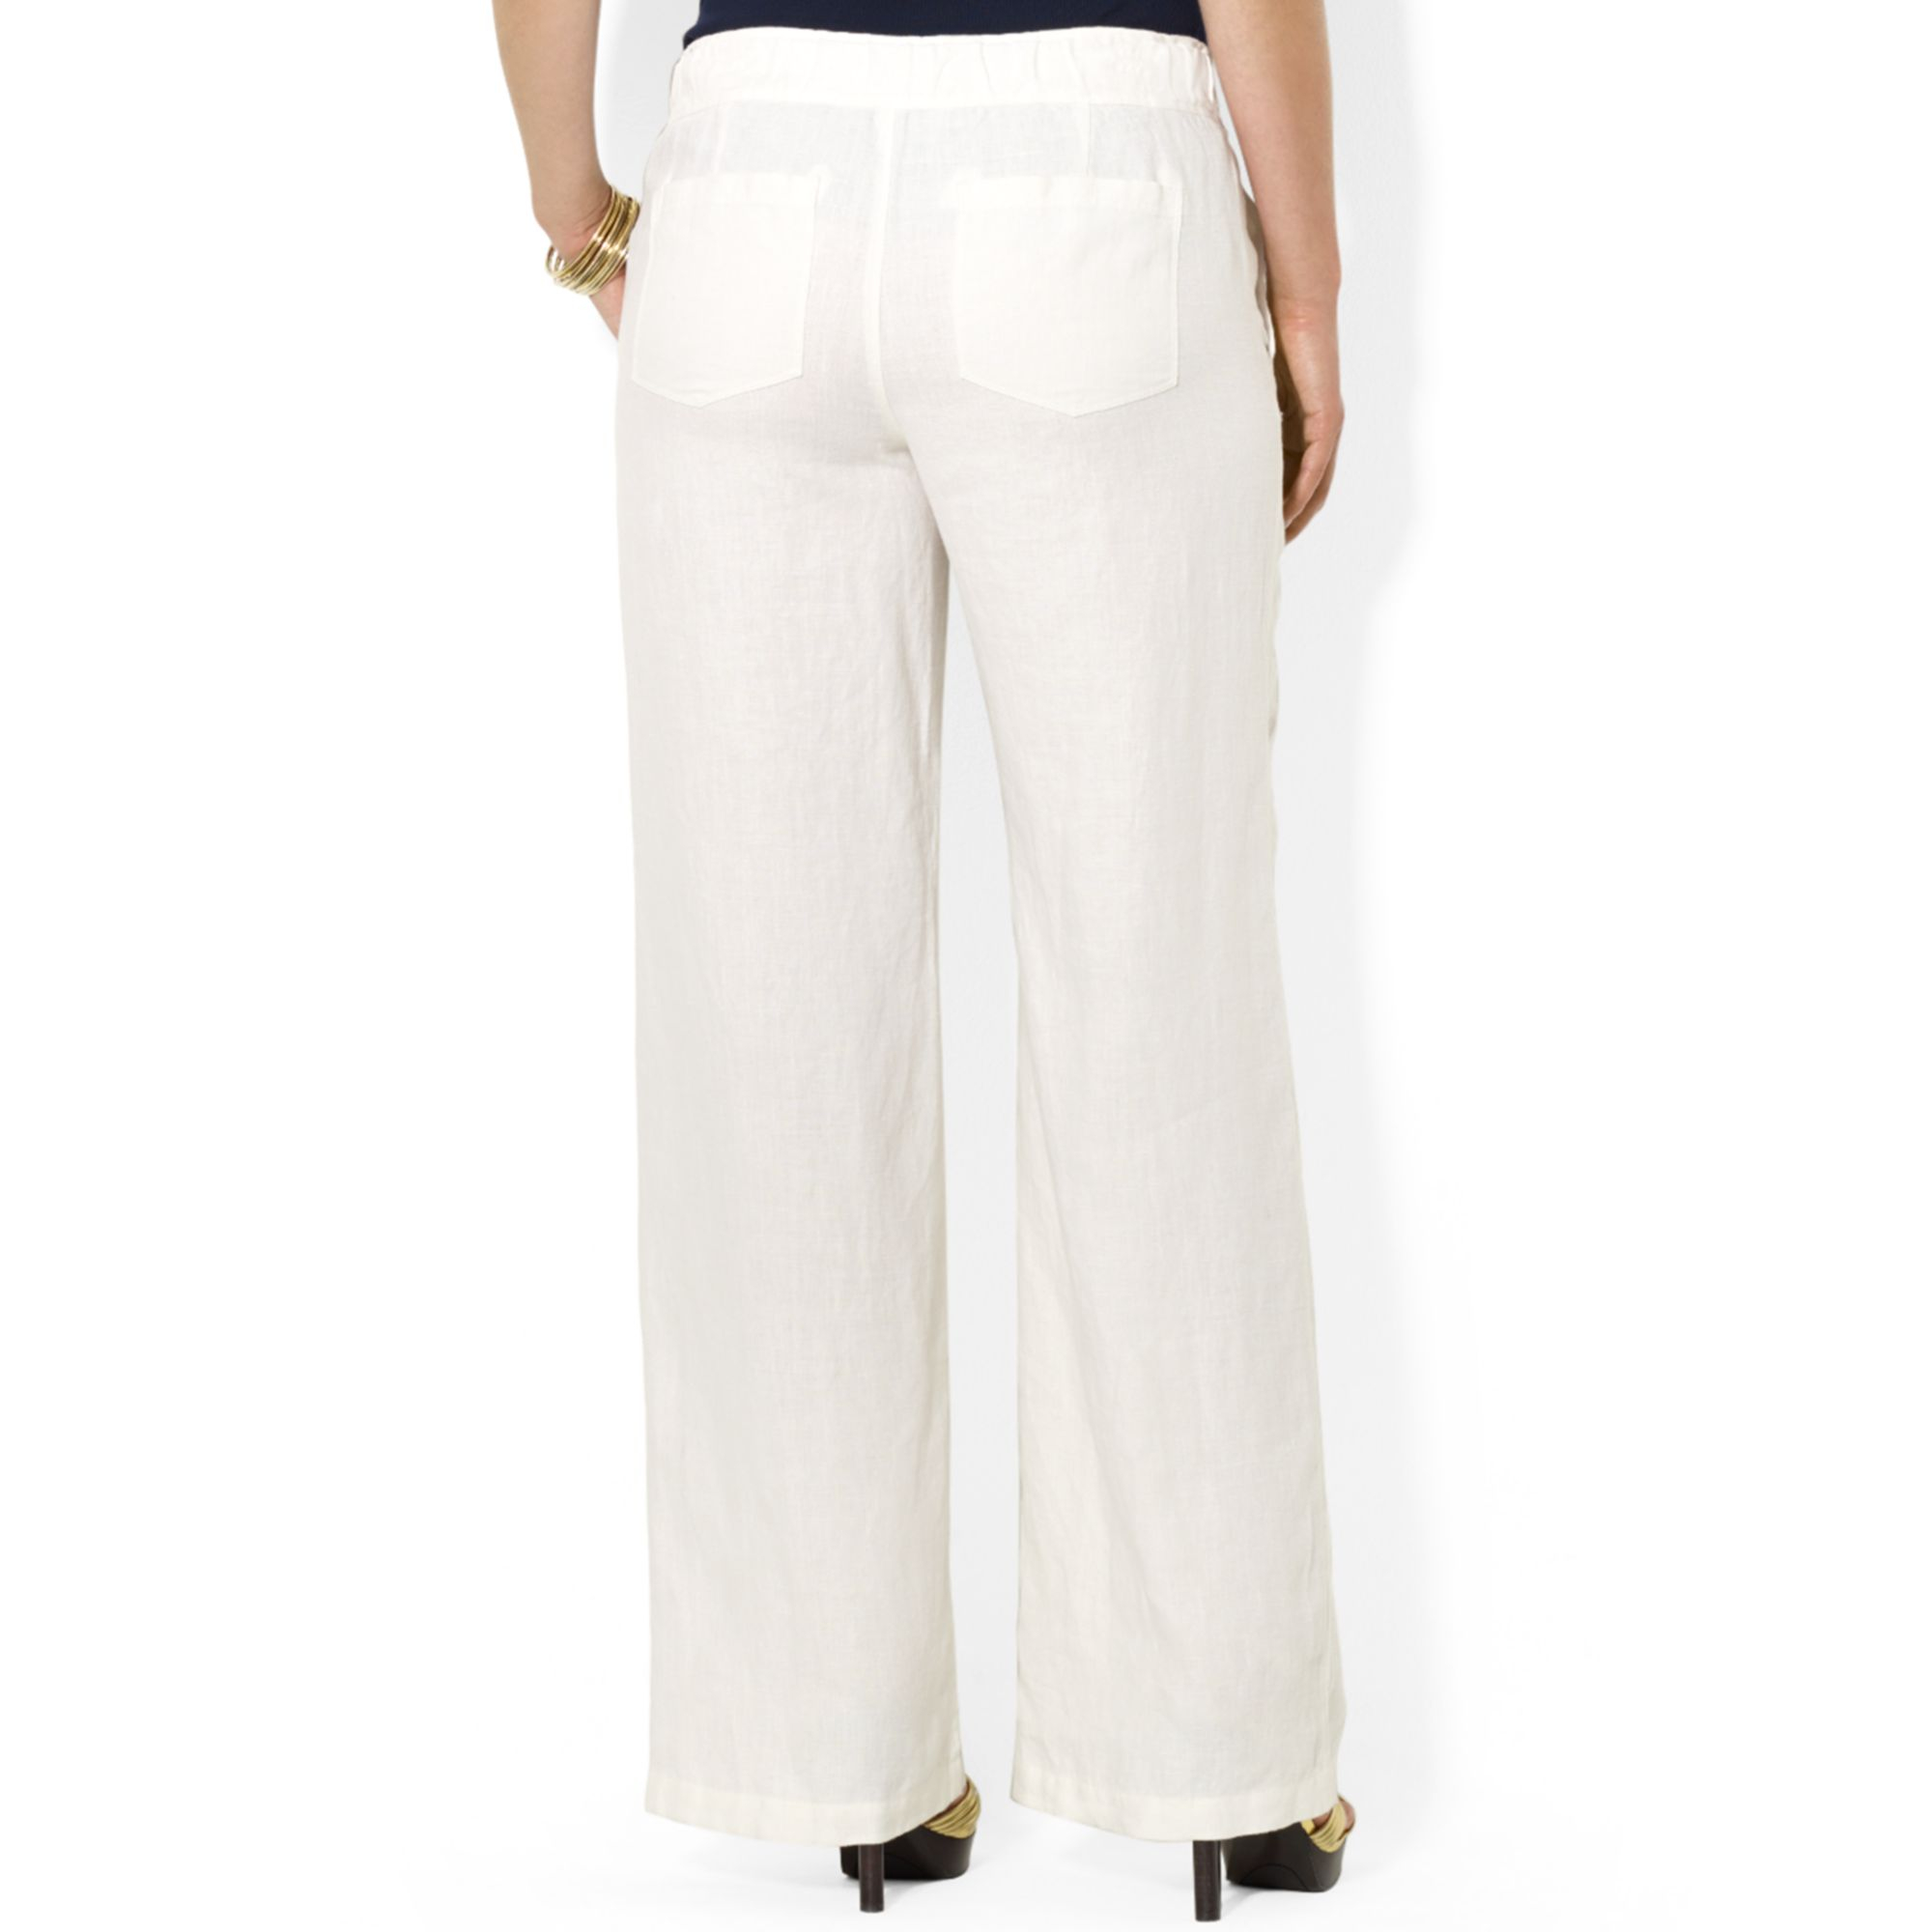 Lyst - Lauren By Ralph Lauren Plus Size Wideleg Linen Pants in White